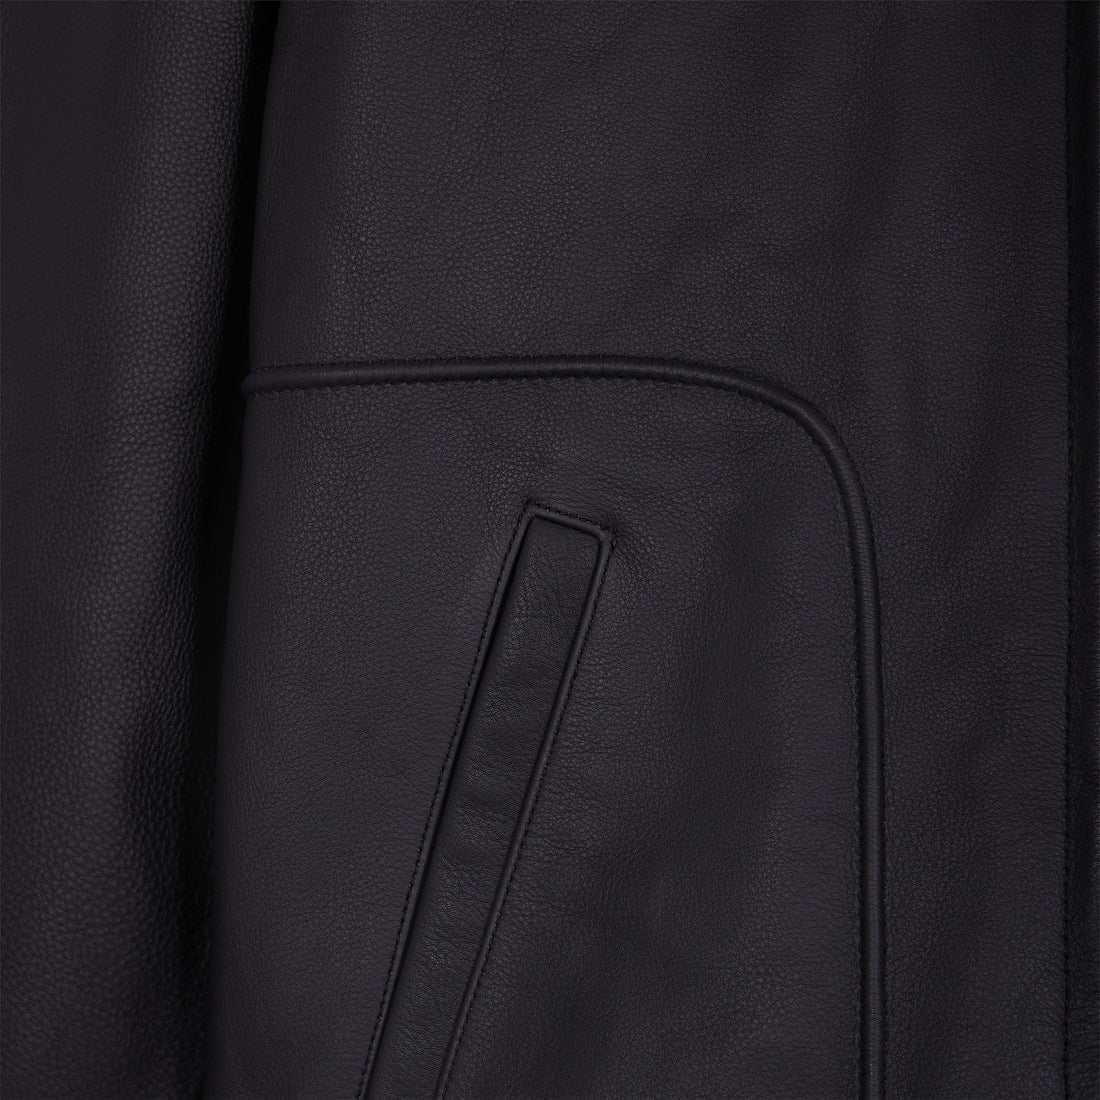 Walk in Paris x Schott NYC - The black leather jacket